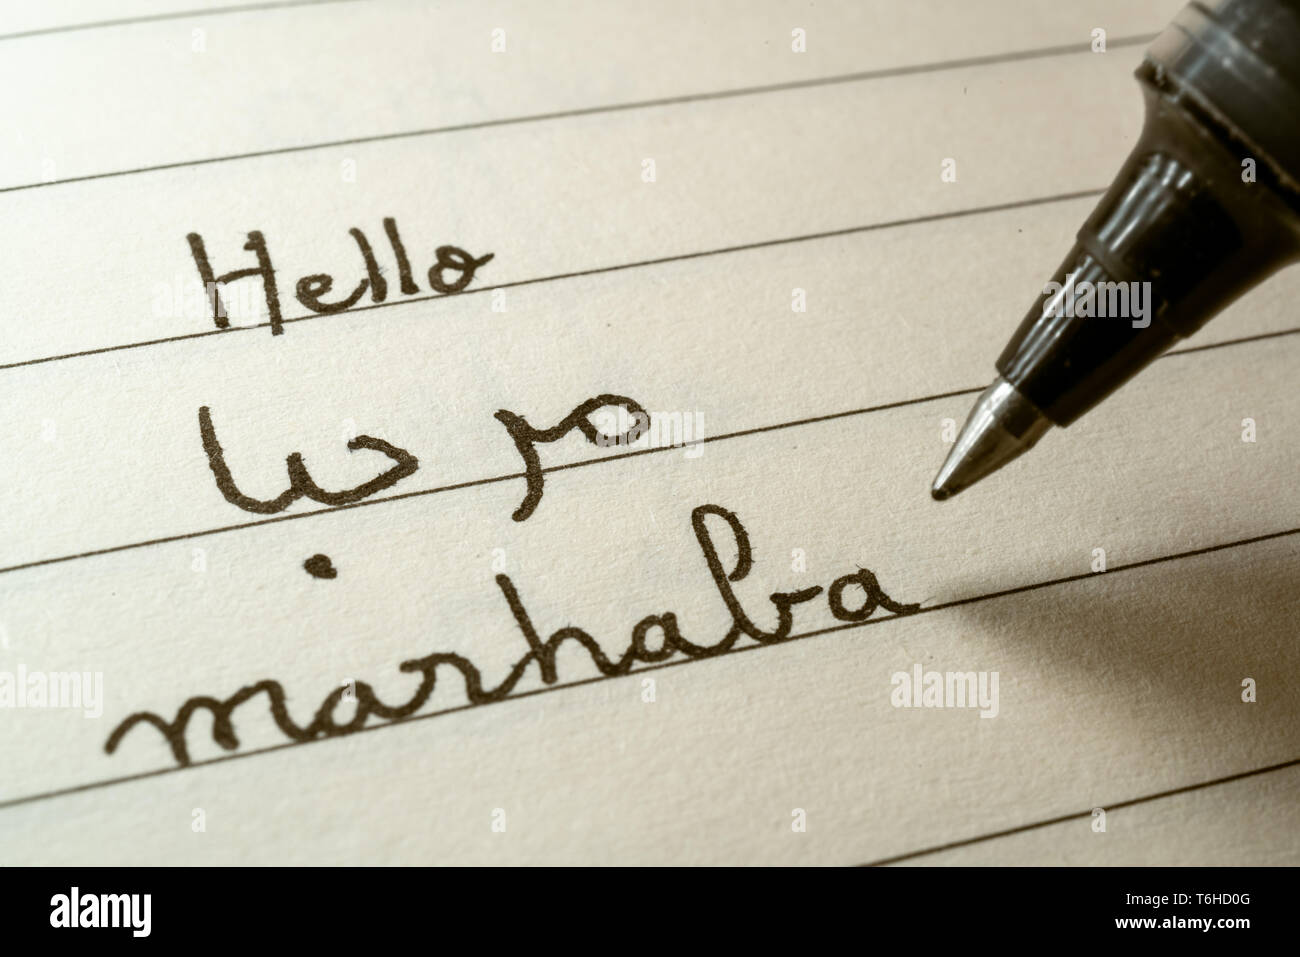 Beginner Arabic language learner writing Hello word Marhaba in abjad Arabic alphabet on a notebook close-up shot Stock Photo